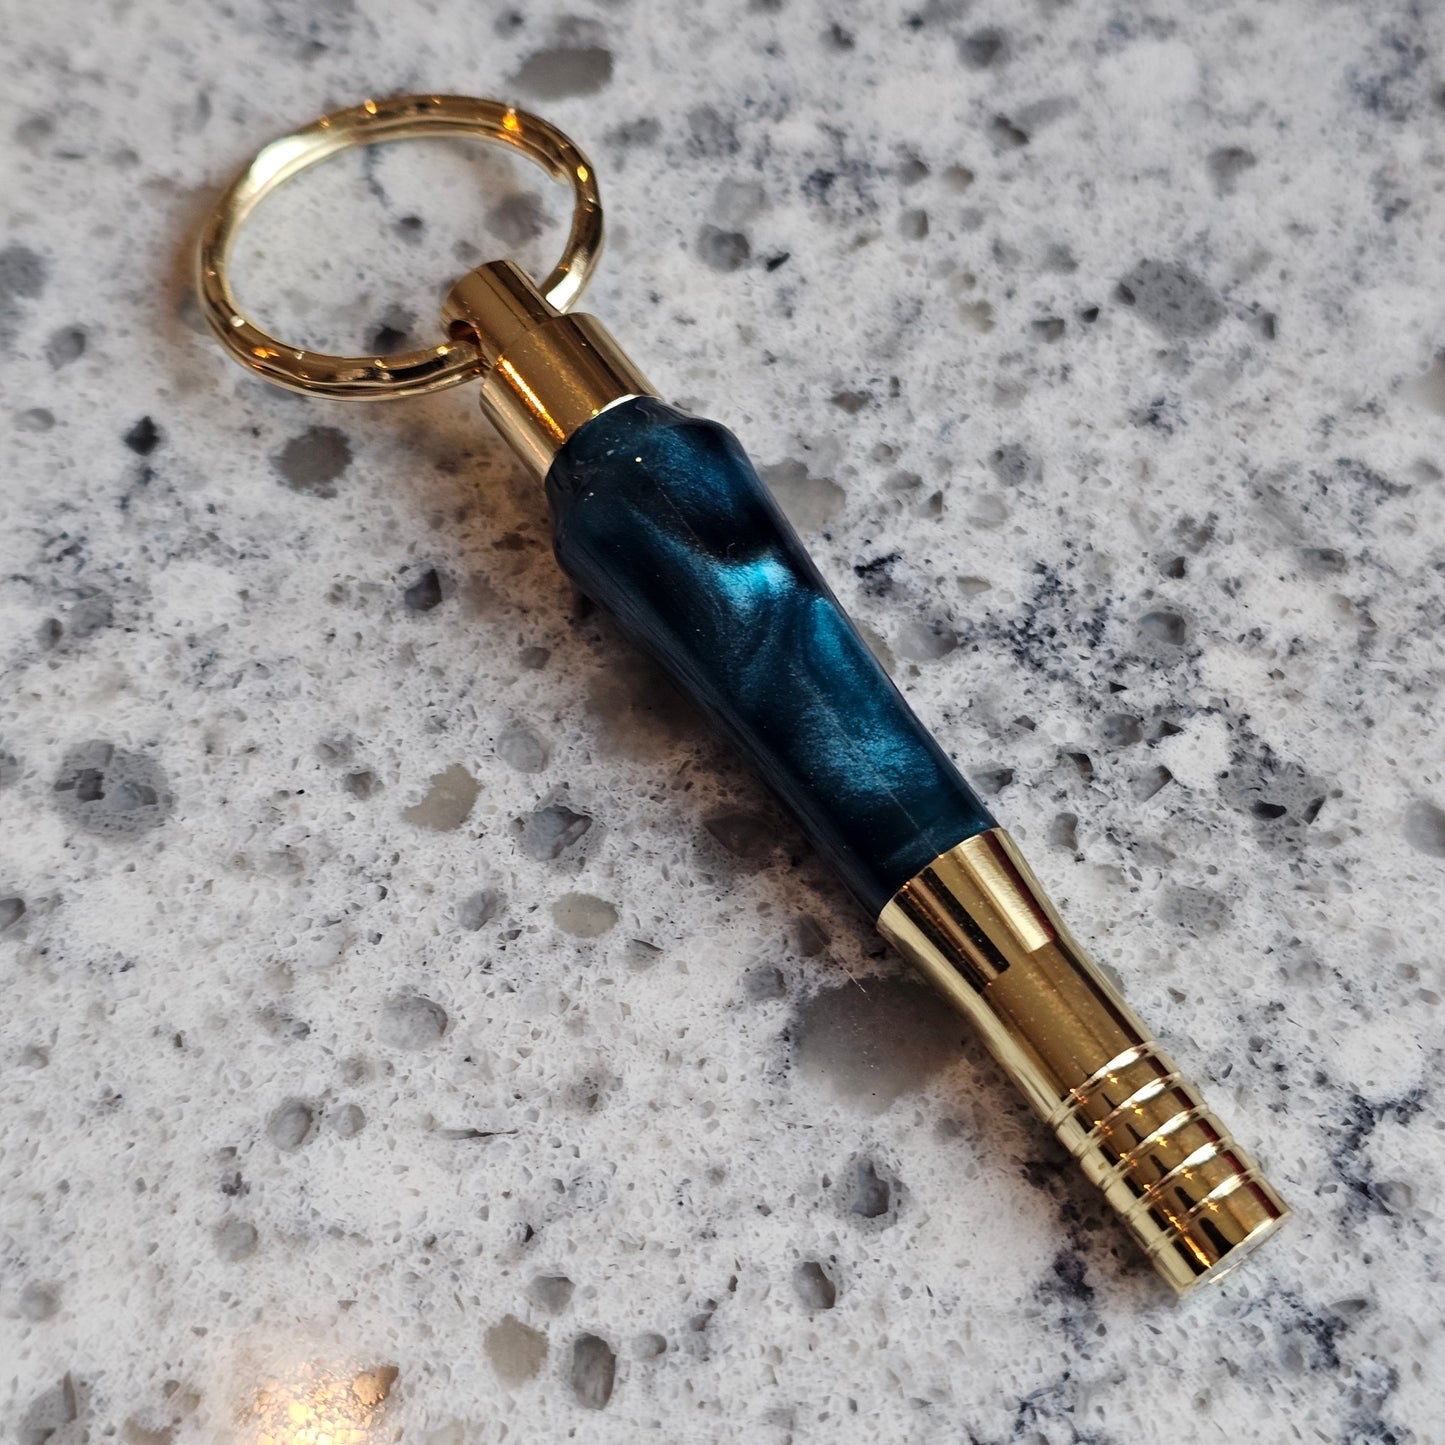 Keychain Safety Whistle